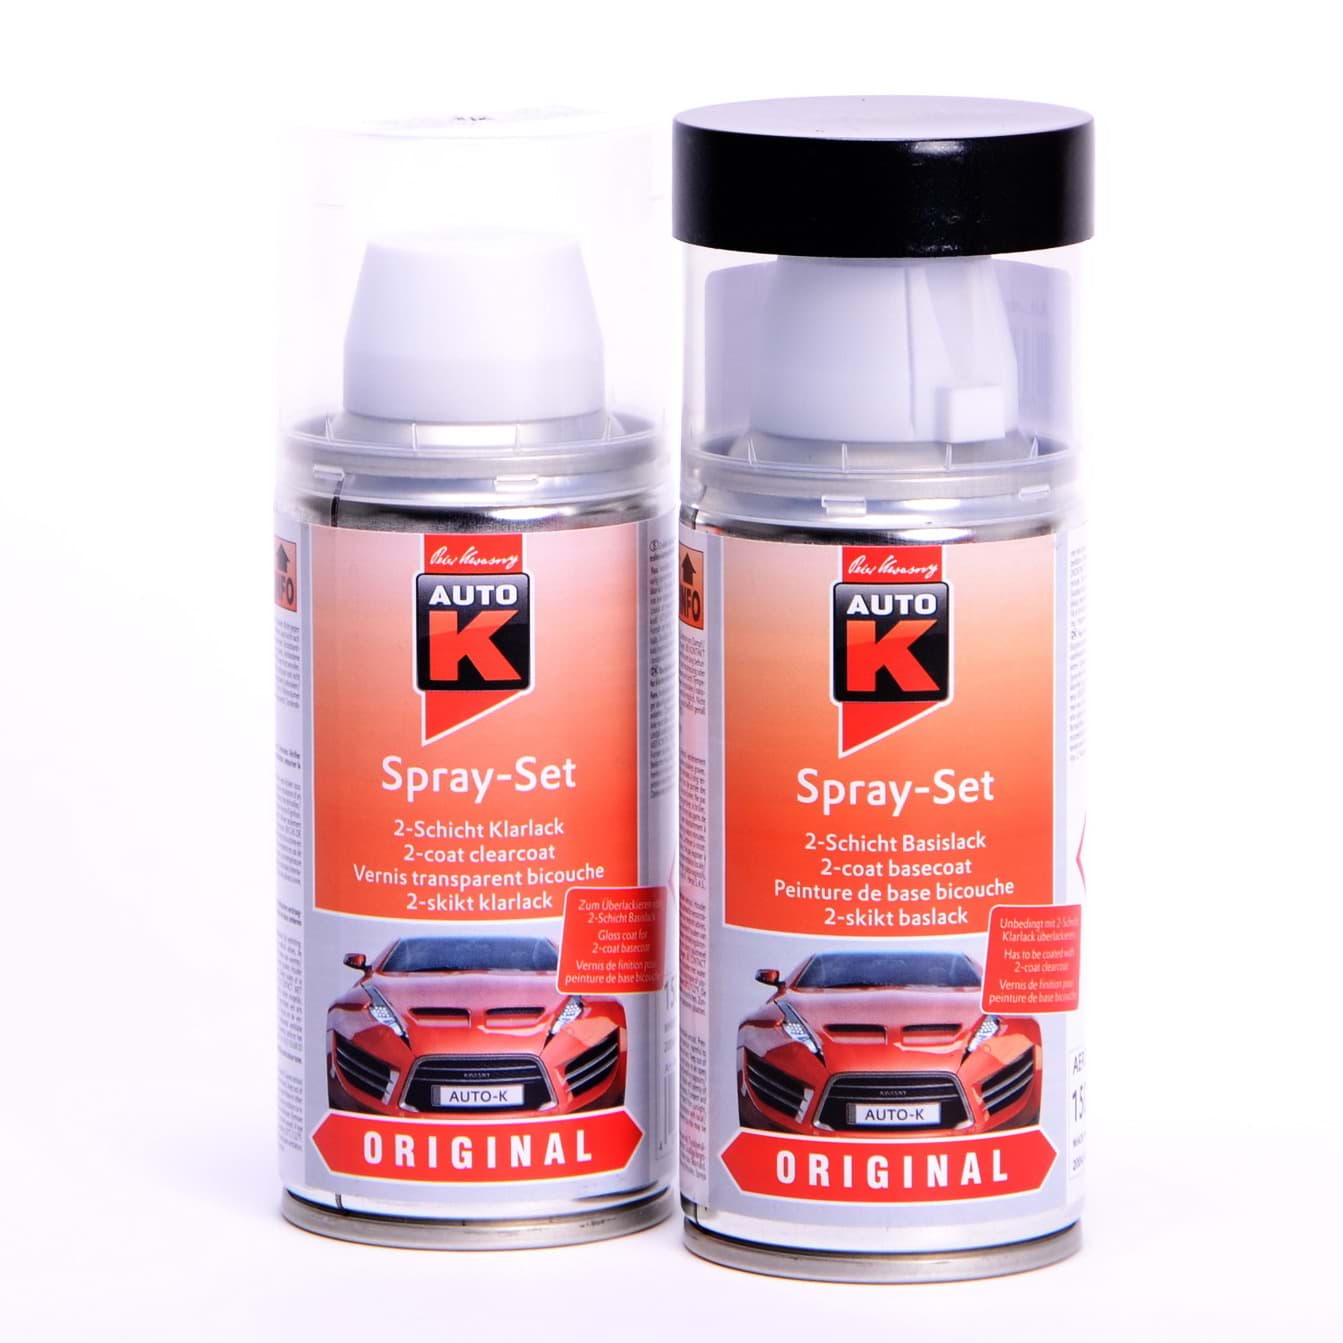 Obraz Auto-K Spray-Set Autolack für Volkswagen, VW, Audi LX7Z Delphingrau met 20943